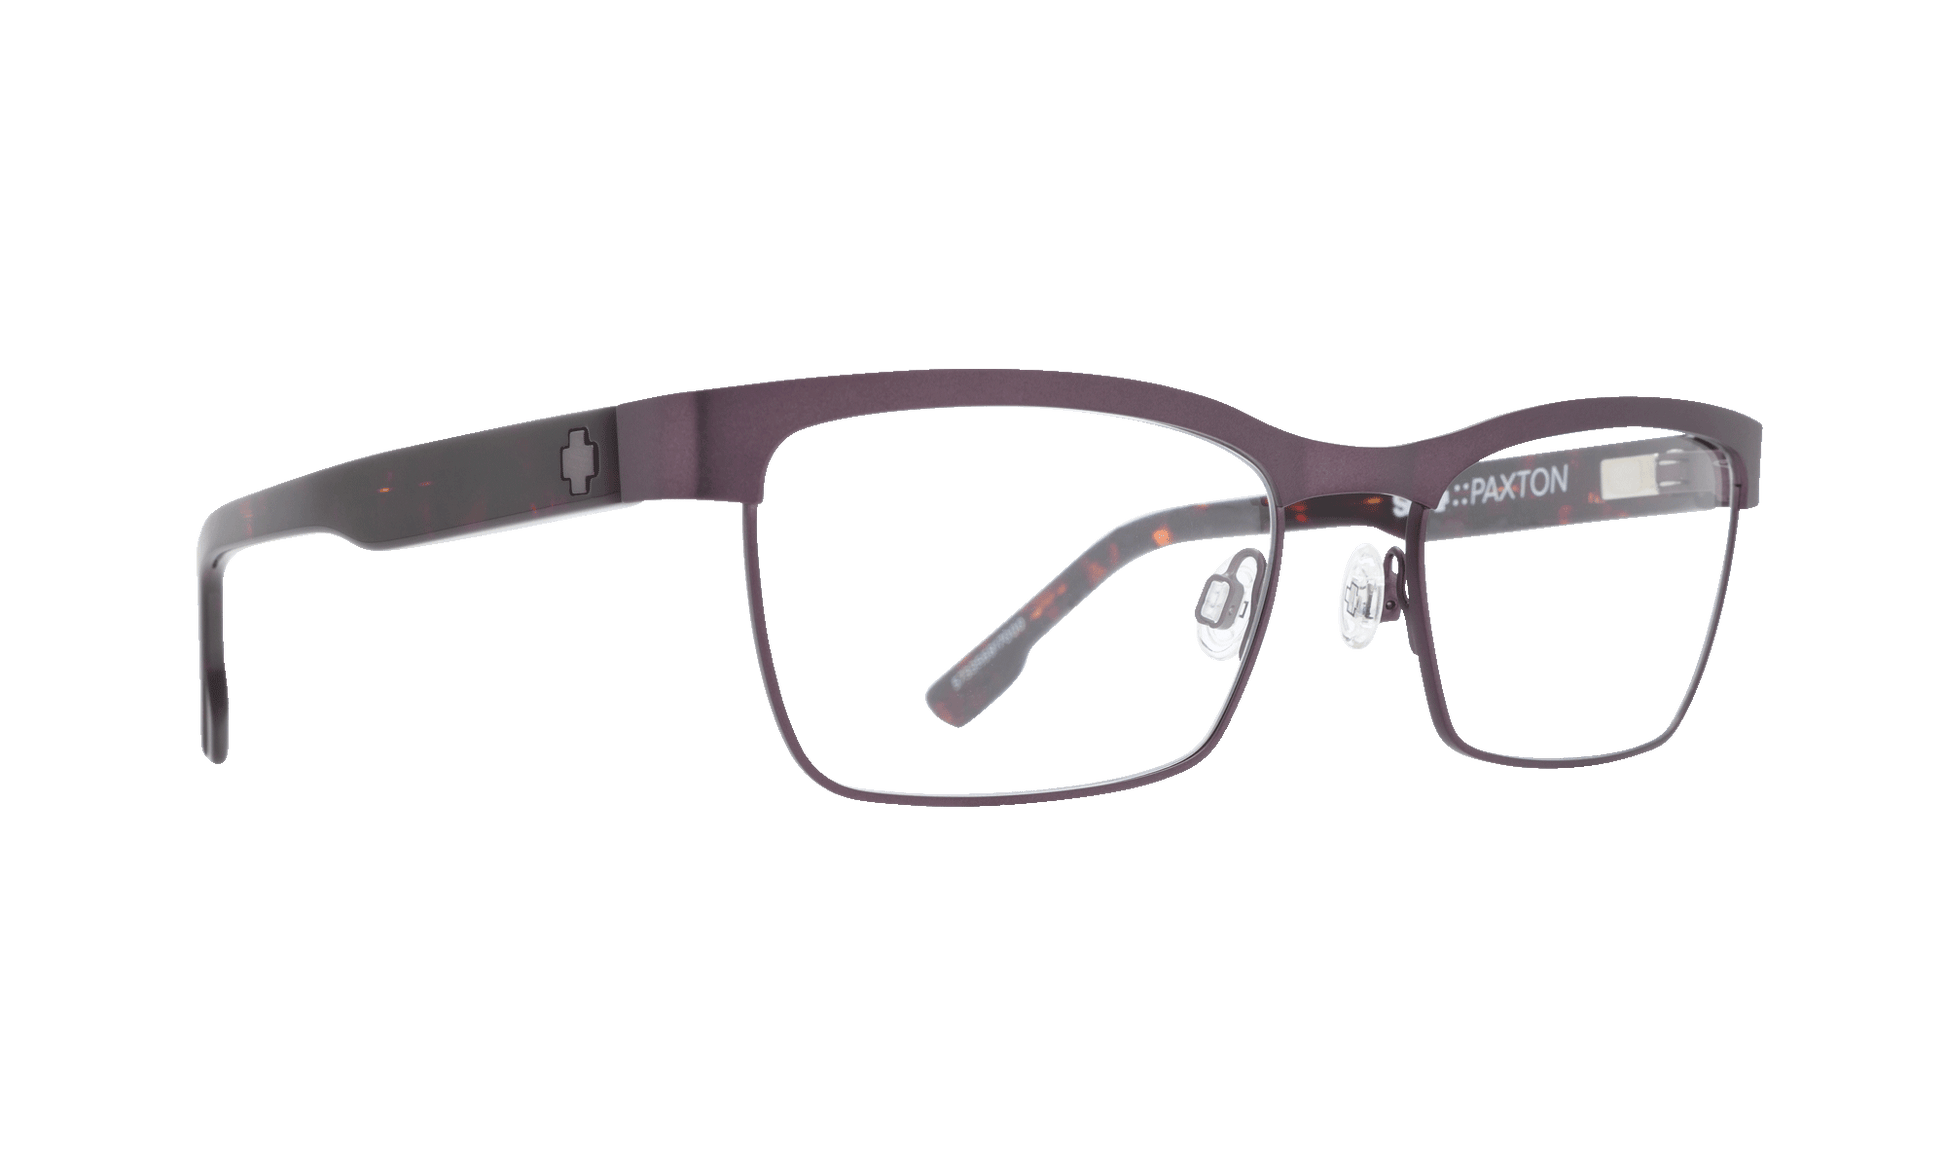 Paxton Sports Goggles Non-Rx Glasses - Gray, Kids' Eyeglasses